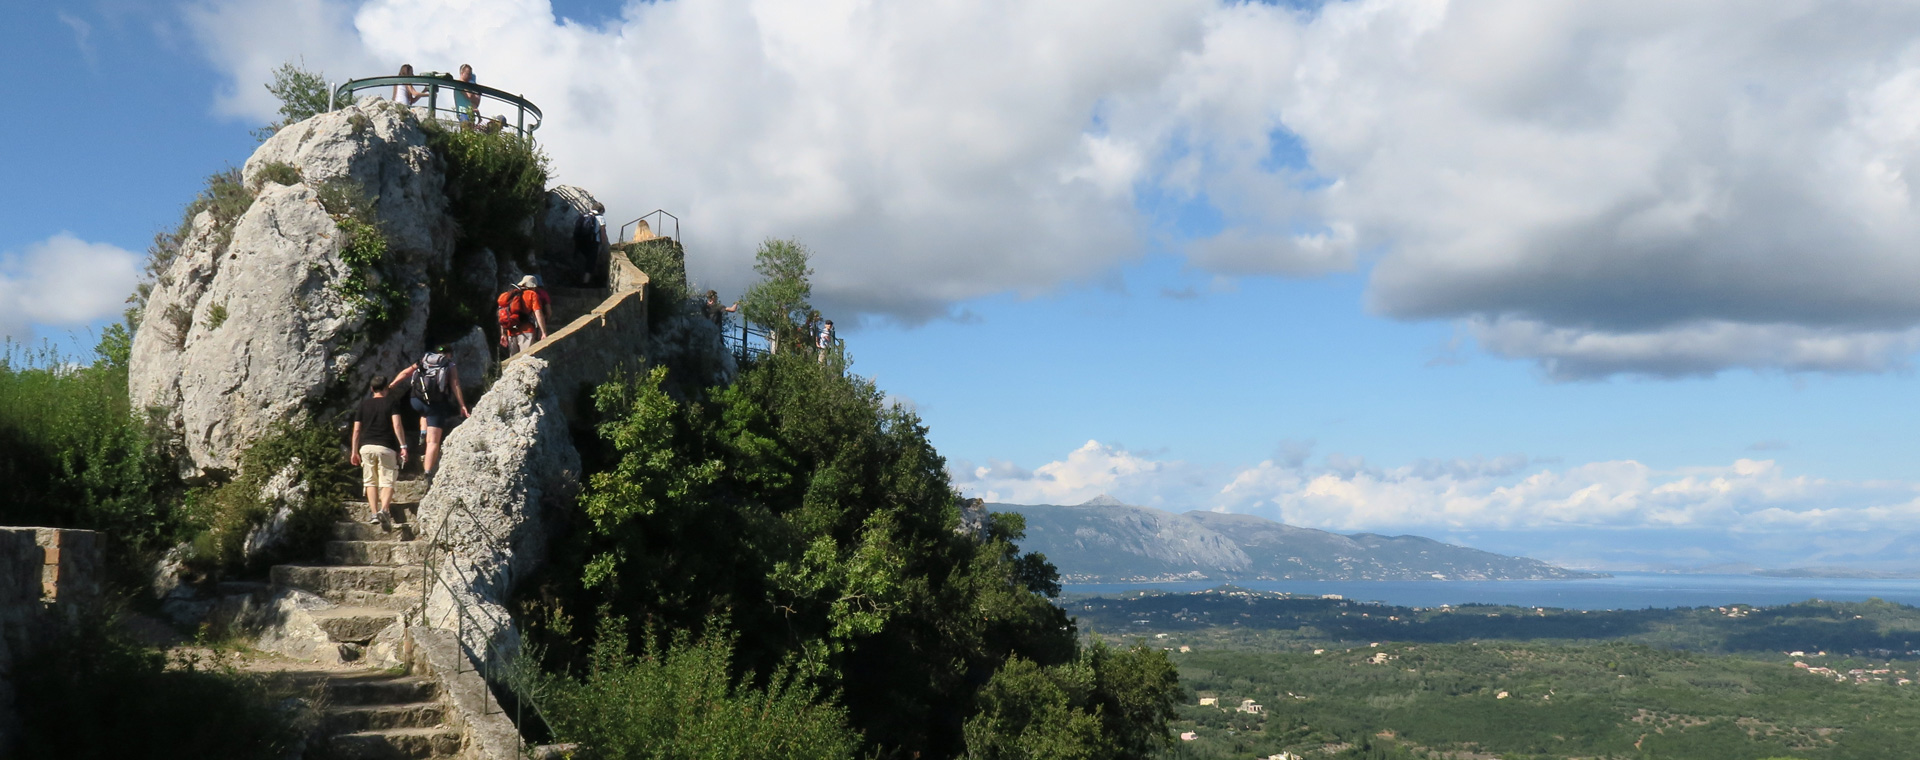 Kaiser's observatory, "Kaiser's Throne" on top of Pelekas, Corfu